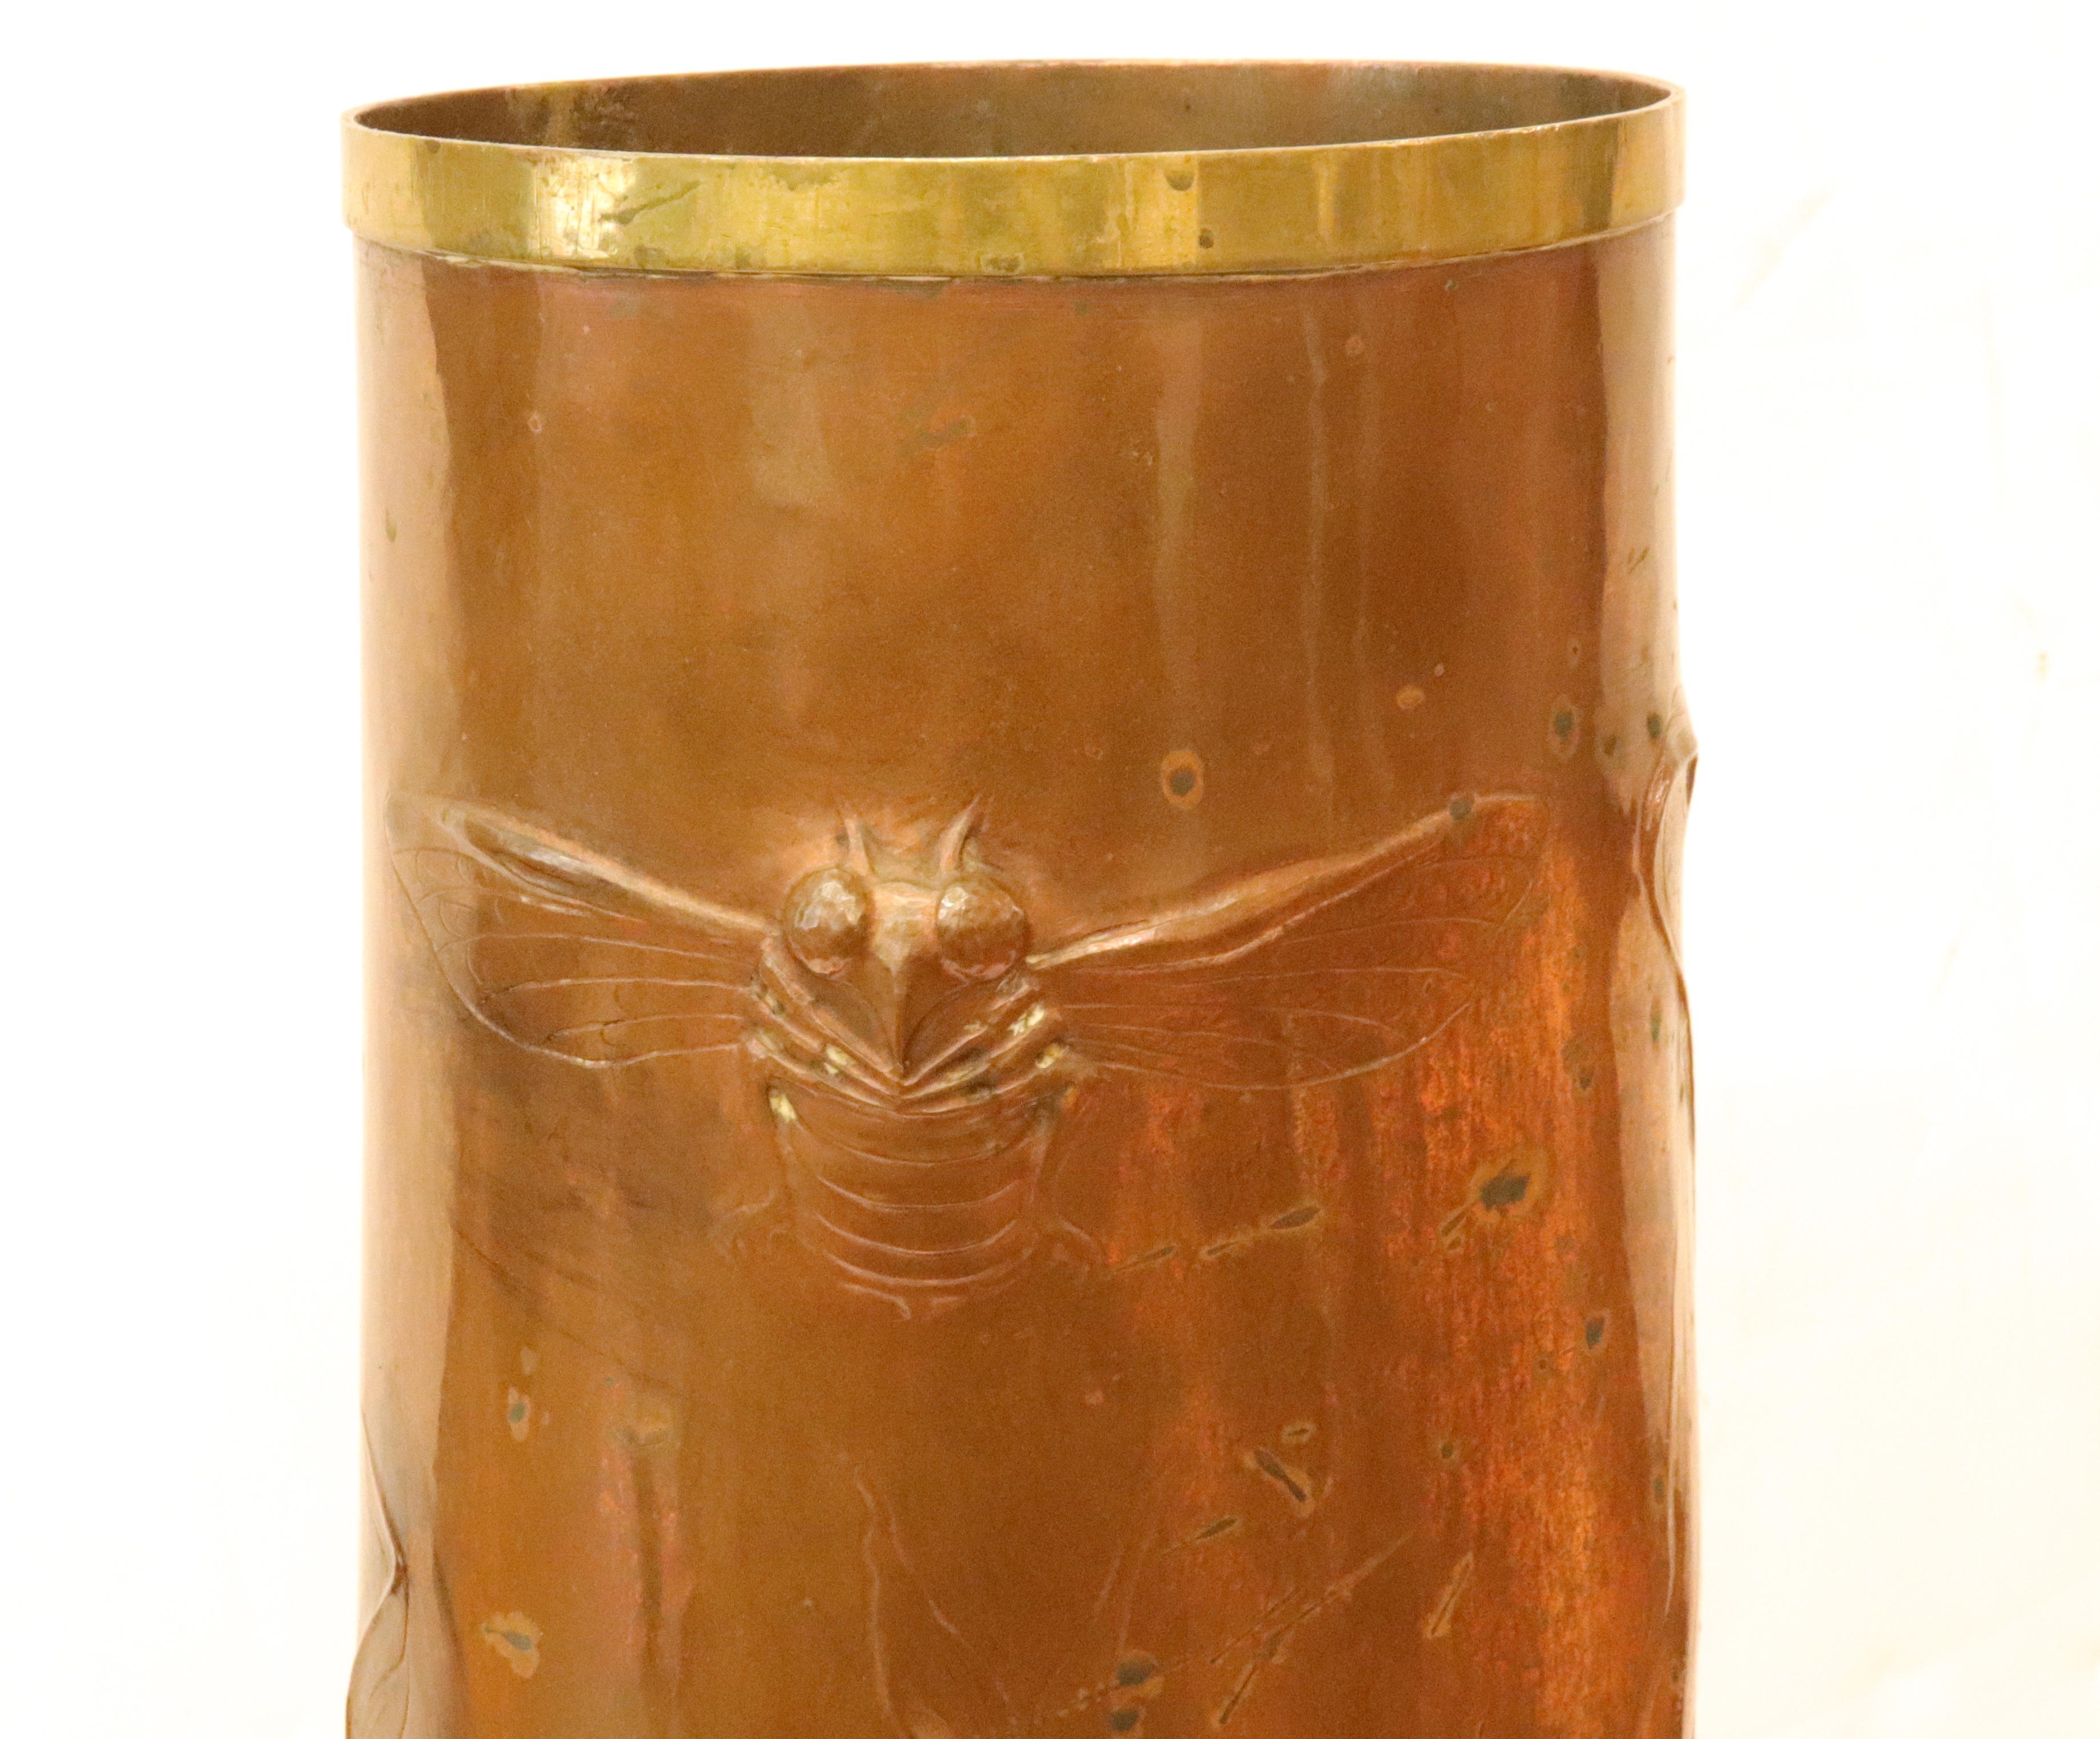 Repoussé Ludwig Vierthaler German Jugendstil Lizard & Dragonfly Repousse Copper Vase For Sale